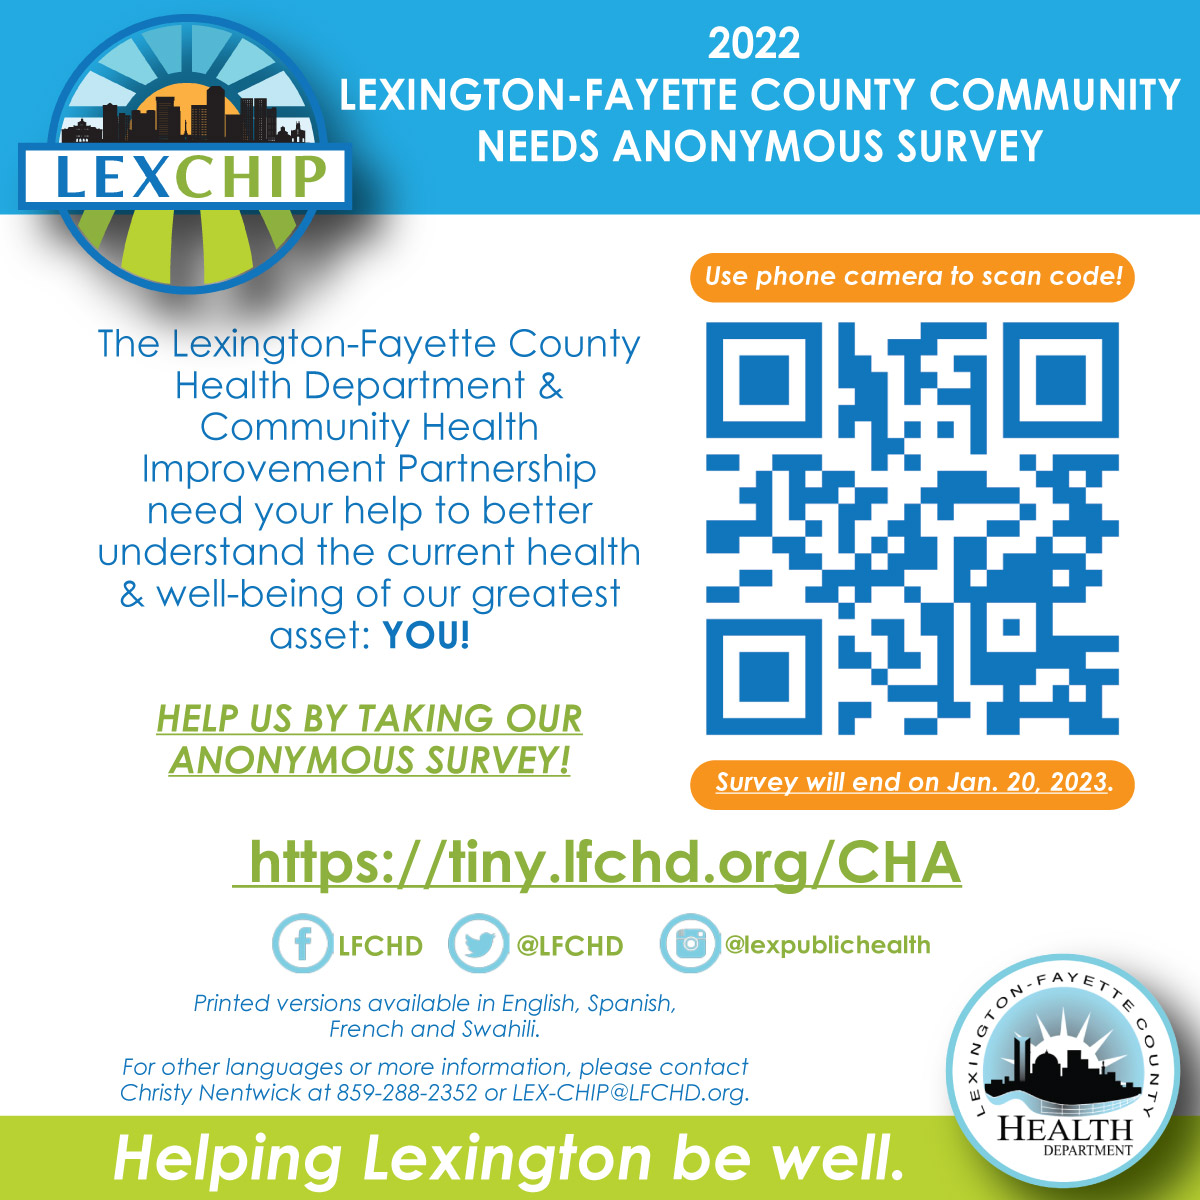 Take the Community Needs Survey to help shape Lexington’s future